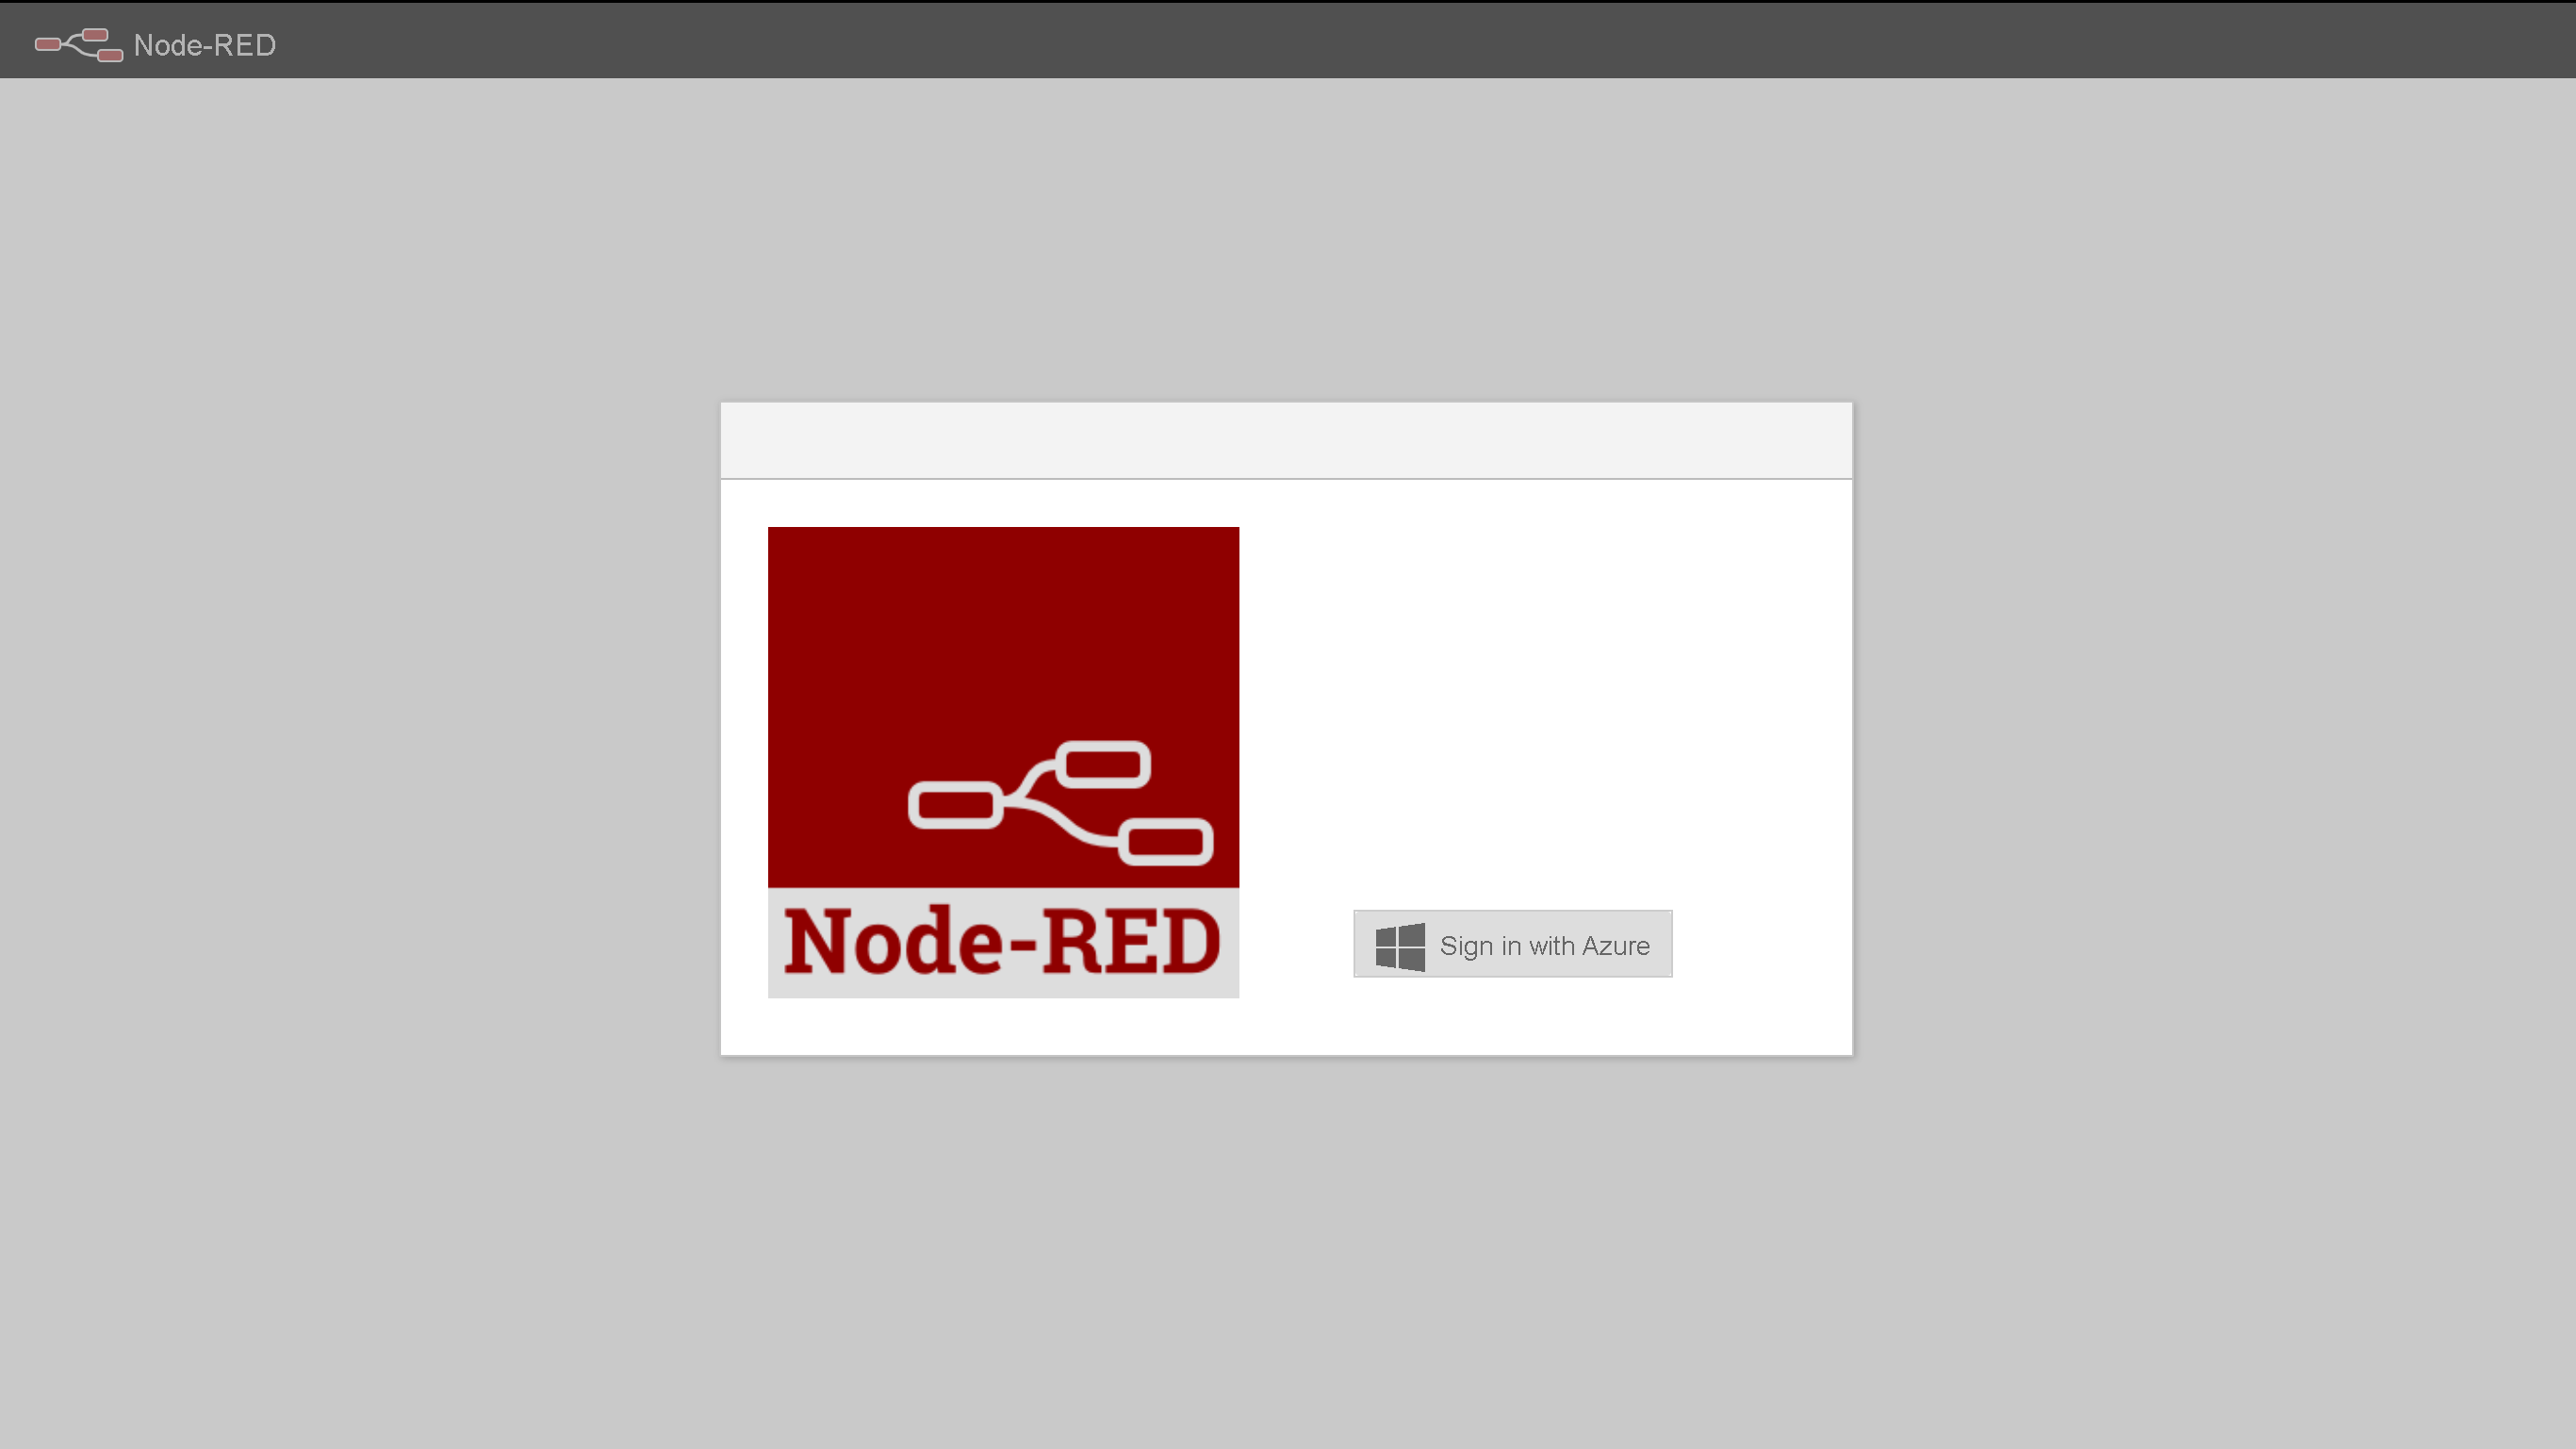 Node-RED: Azure Login